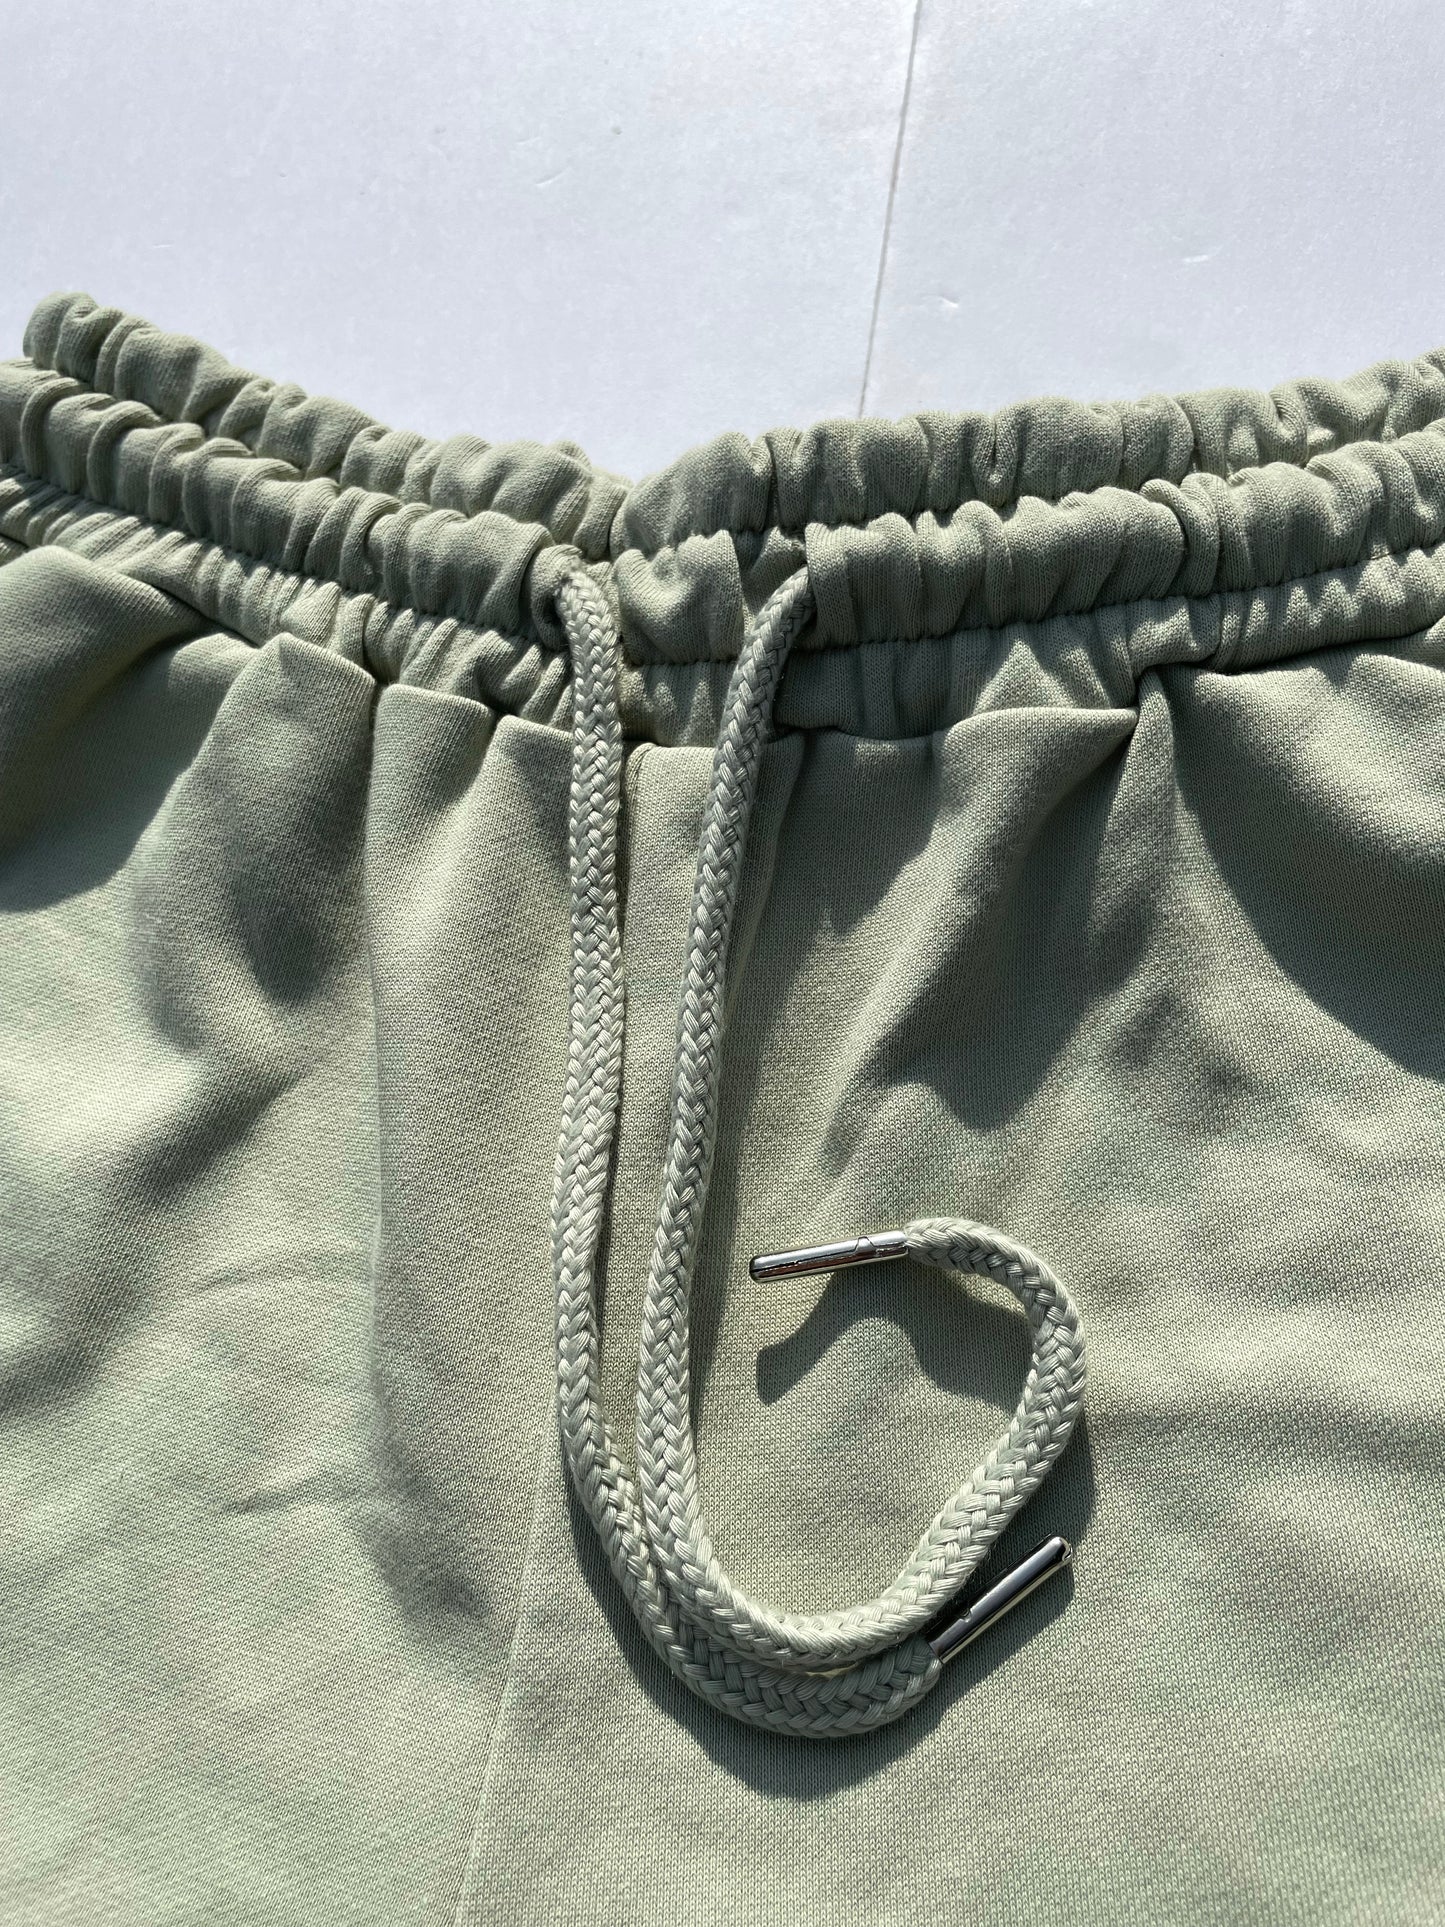 Chosen Shorts (Mint Green, Black)